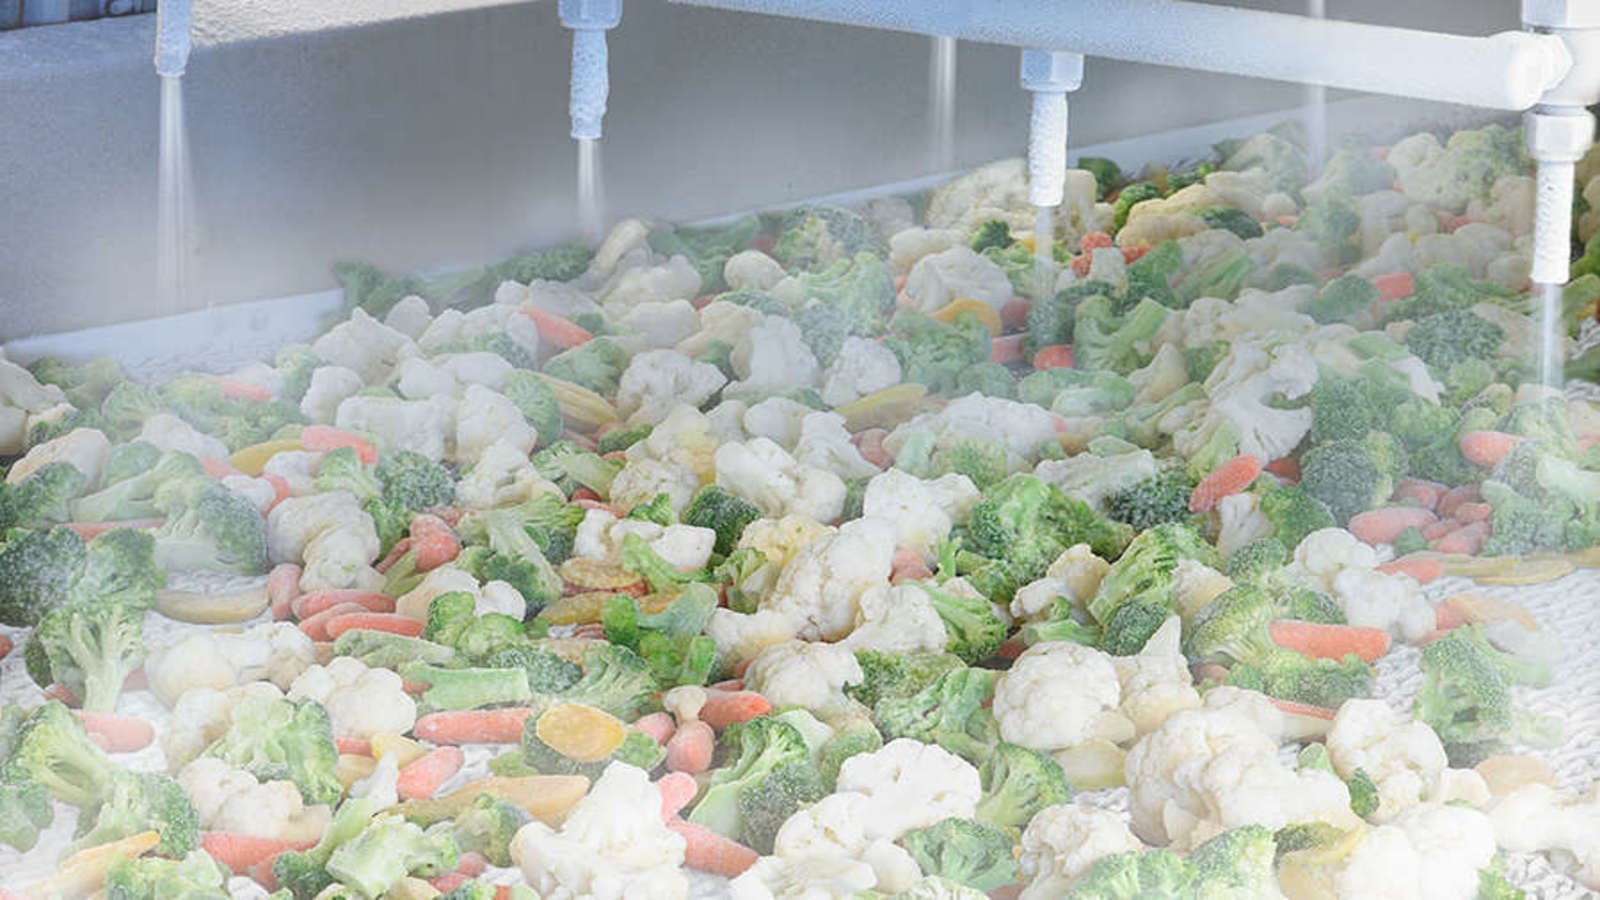 Milestone in frozen food industry as researchers develop new freezing method